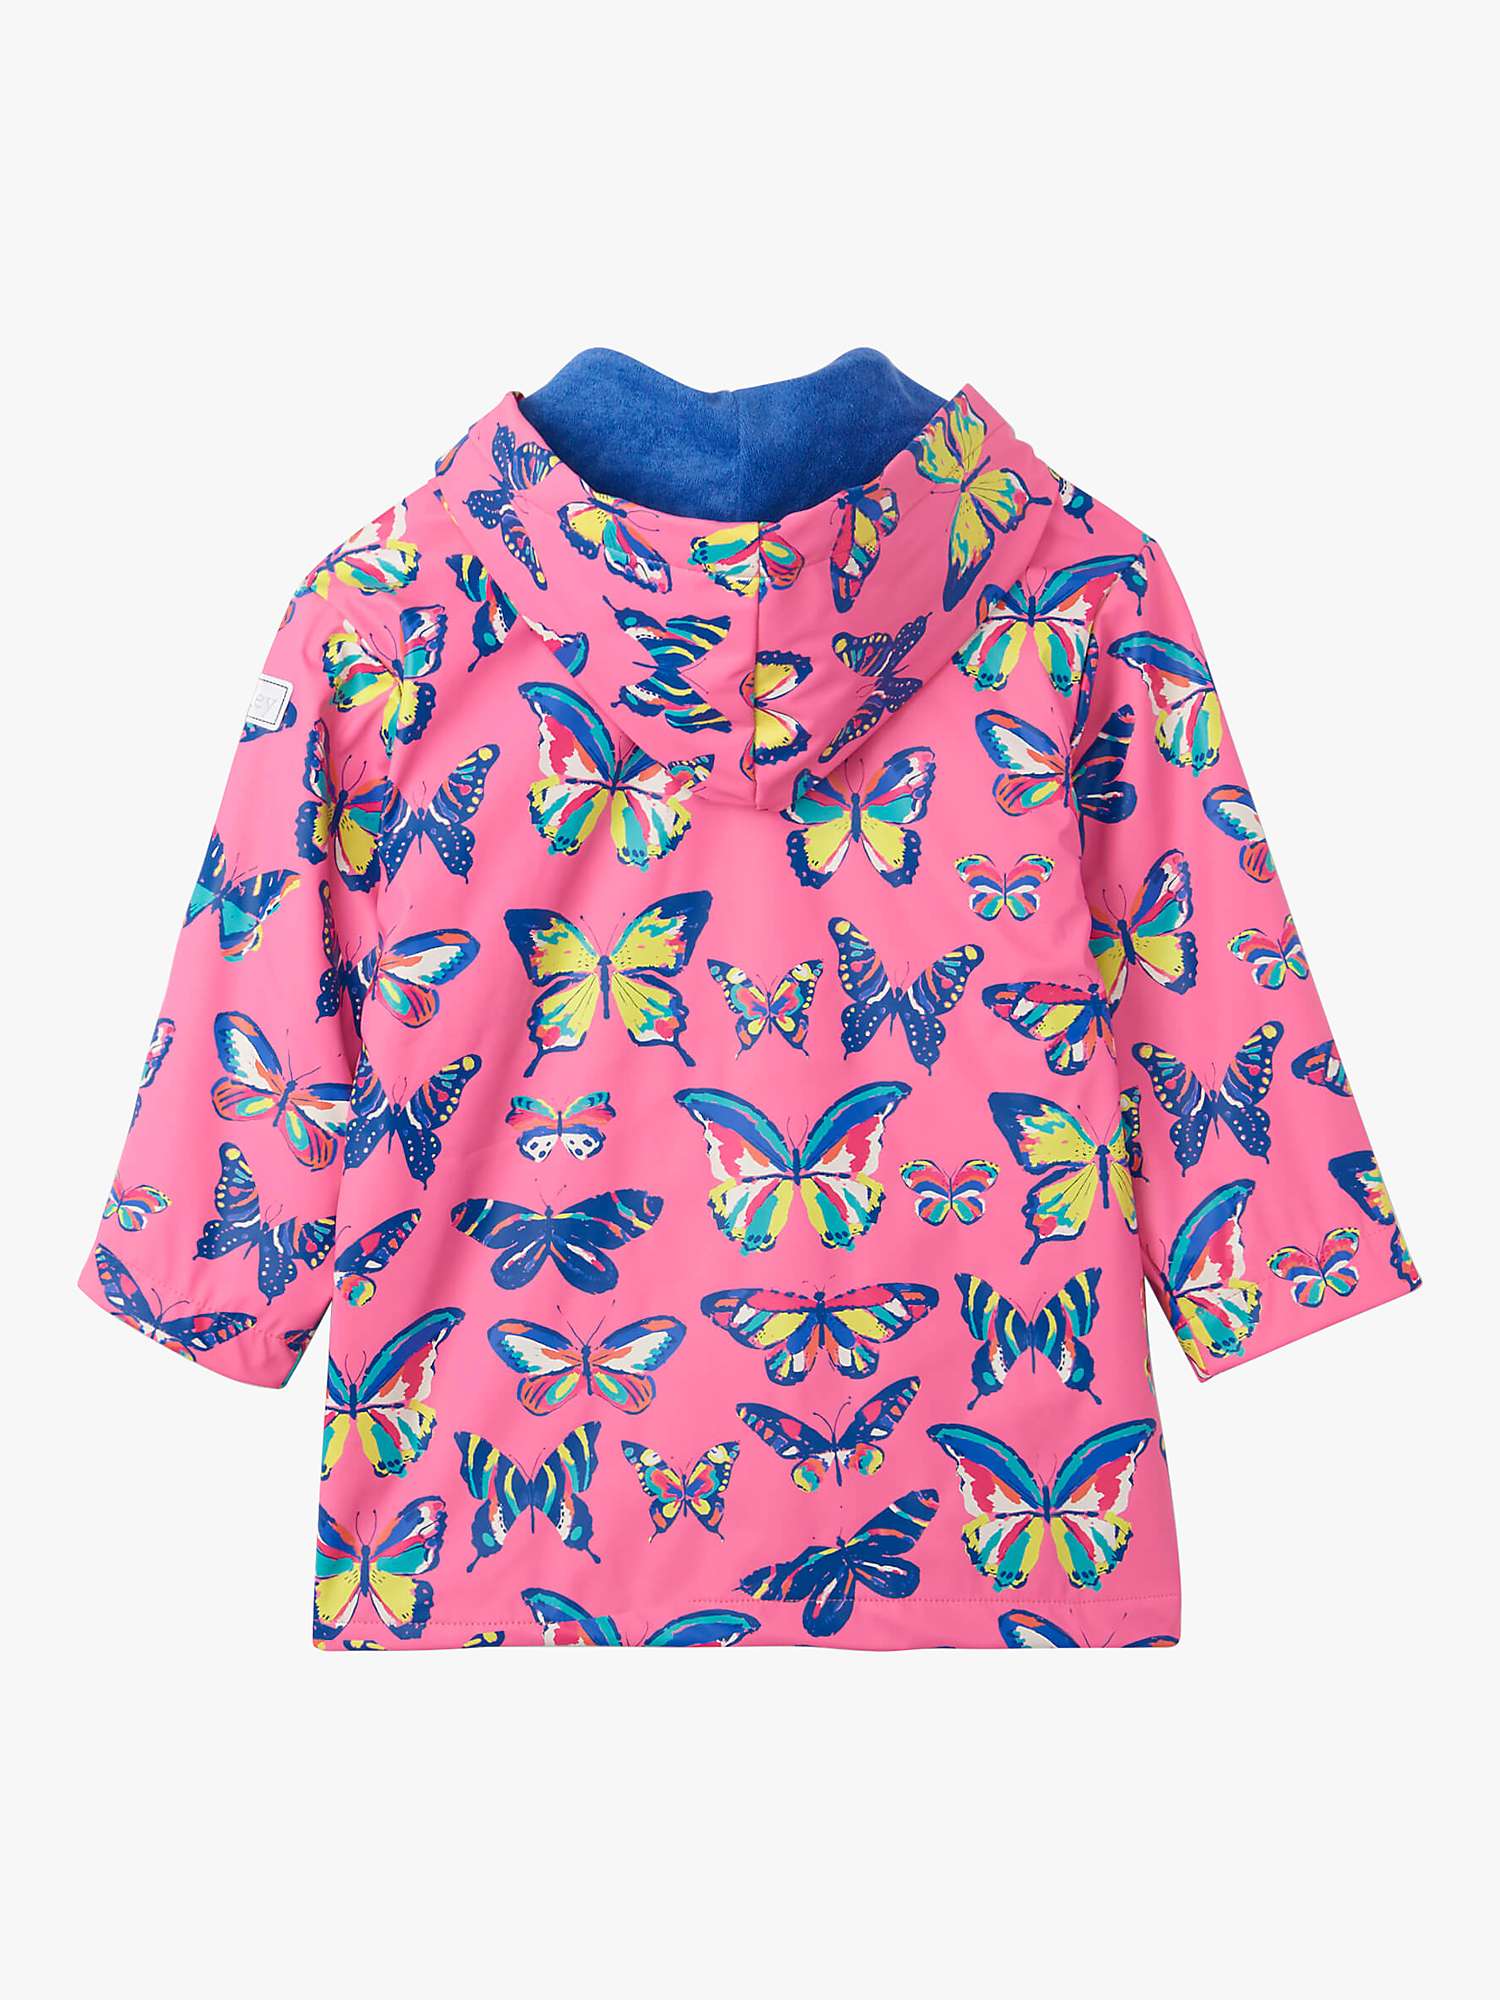 Hatley Girls Little Printed Raincoats Groovy Butterflies 3 Years 